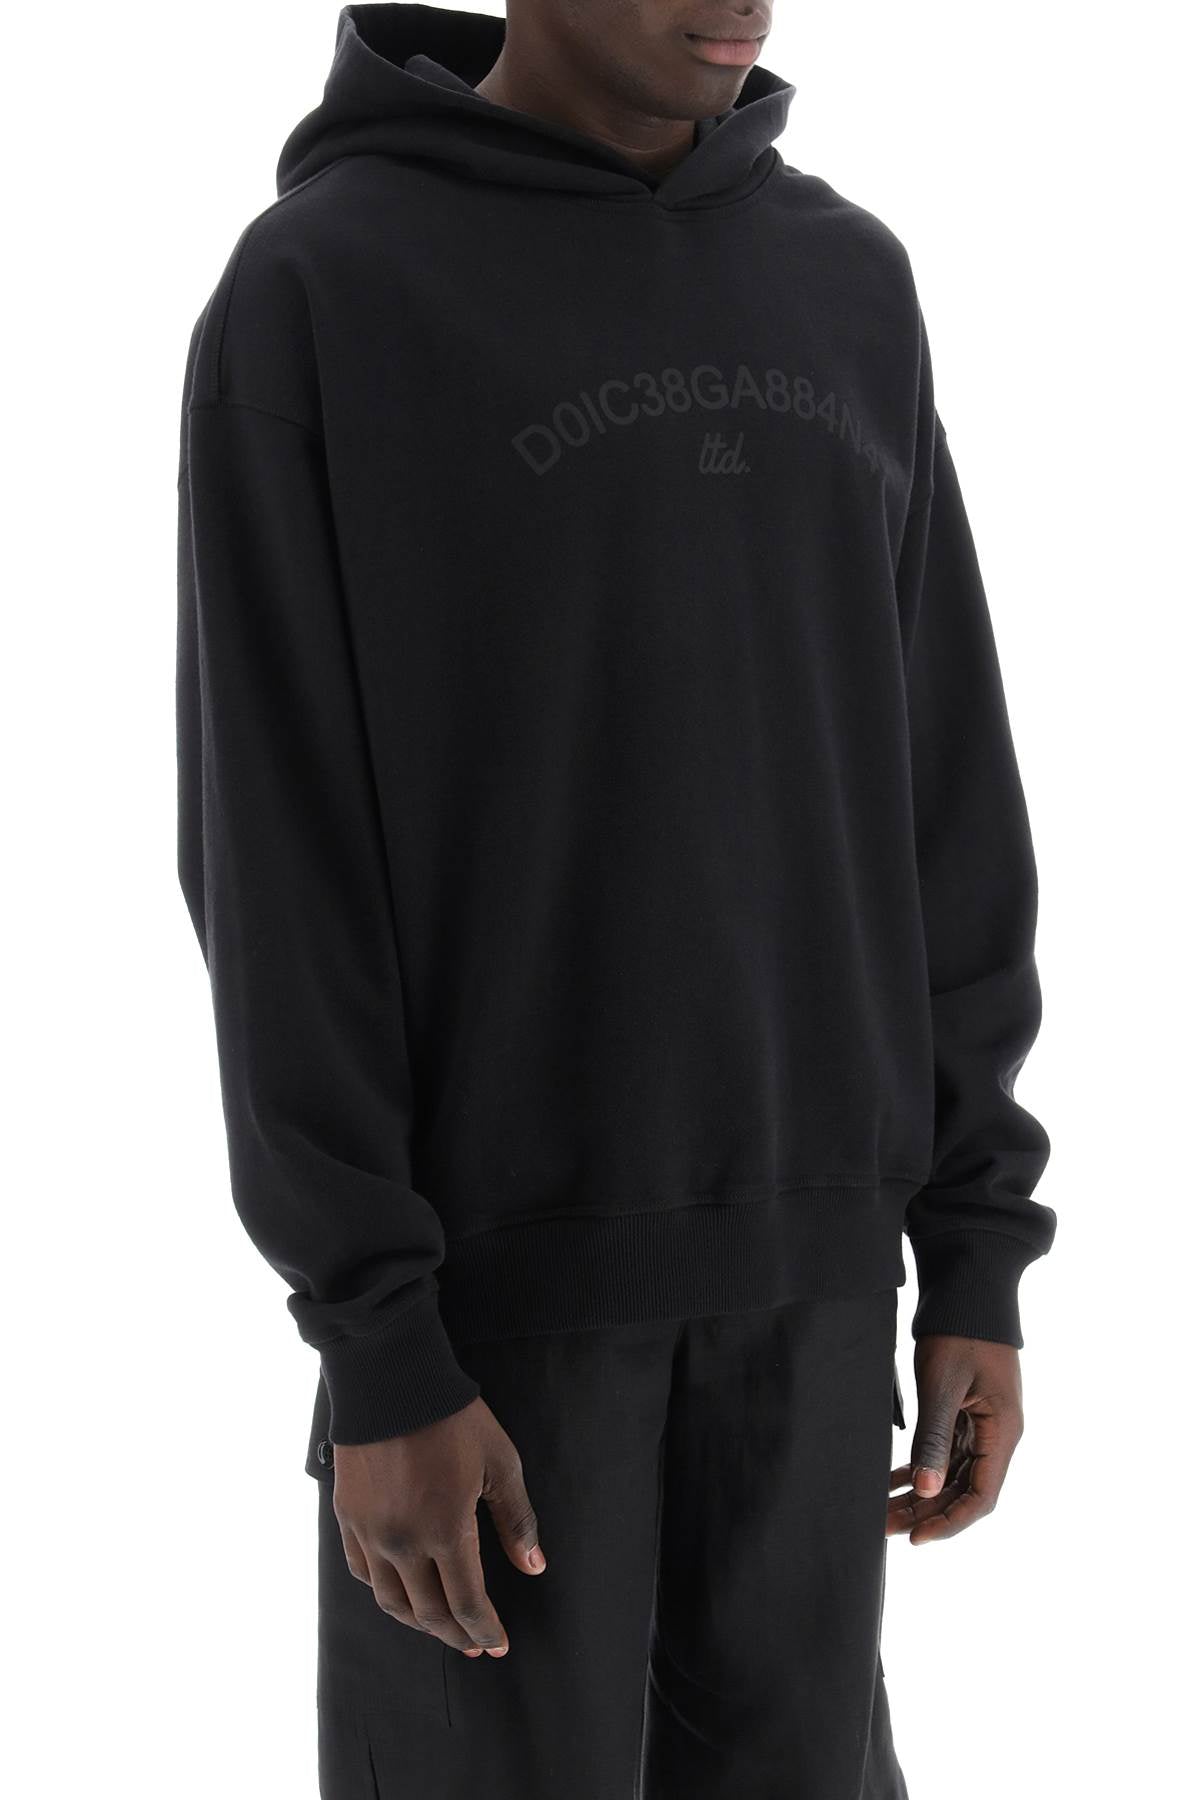 Dolce & gabbana hooded sweatshirt with logo print-1